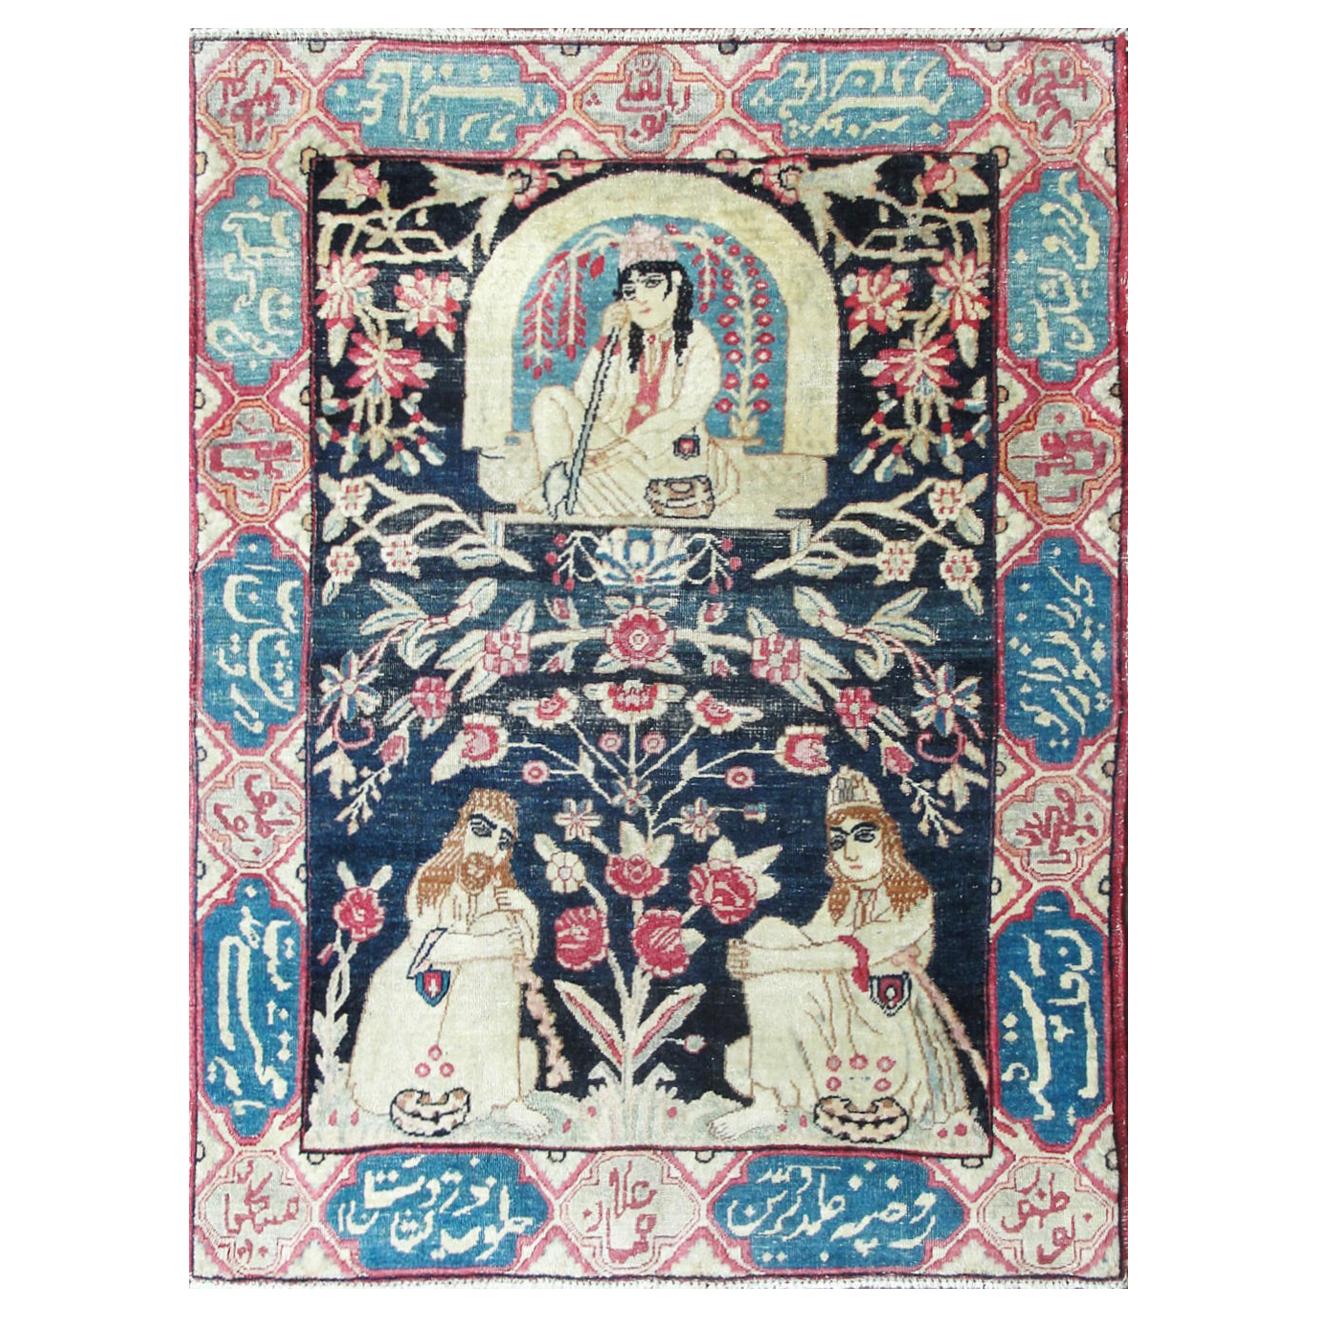 Pictorial Antique Persian Kermanshah Rug